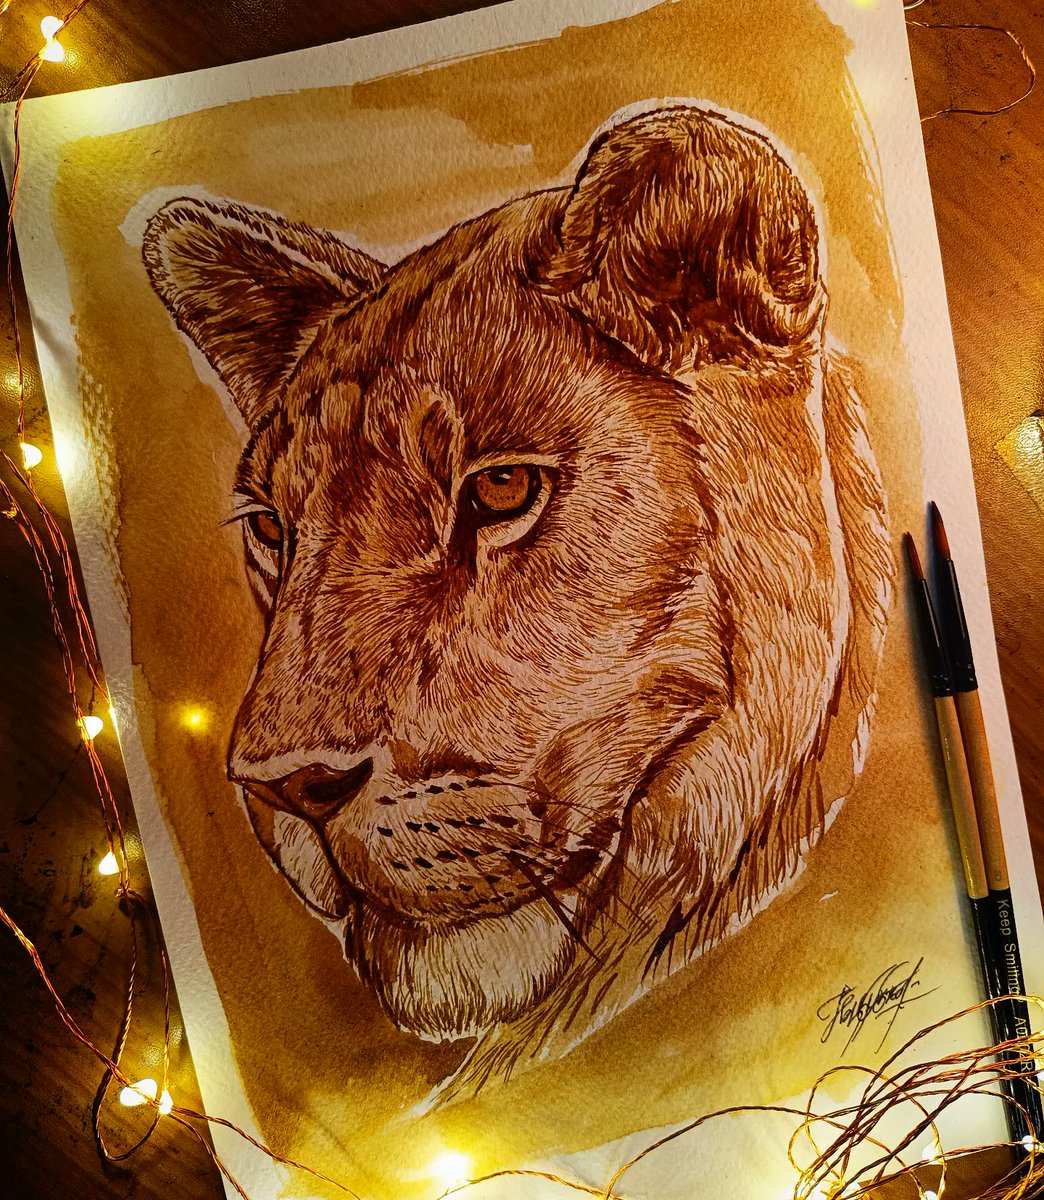 Coffee painting of 🦁
#leo #lion #wildlife #coffeepainting #coffee